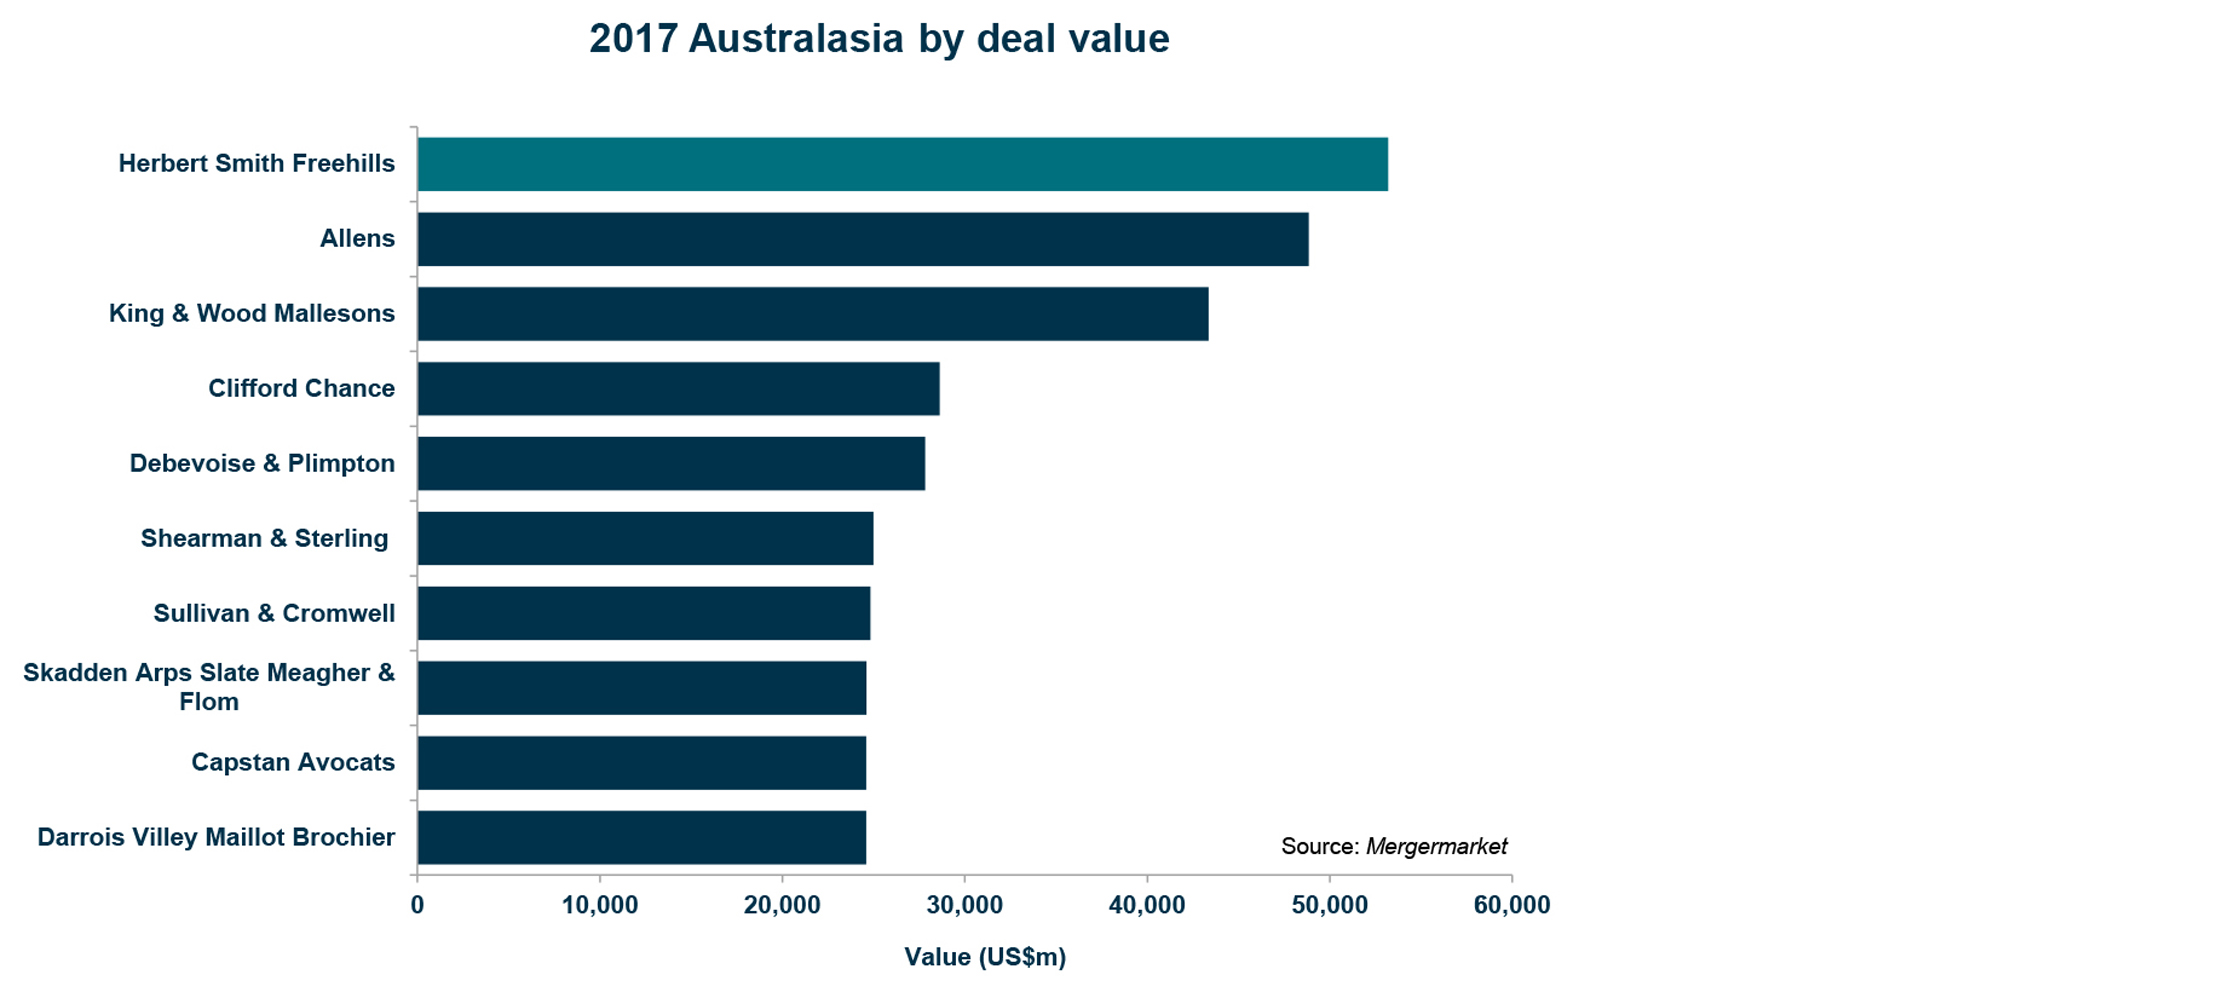 Total deals by value - Mergermarket